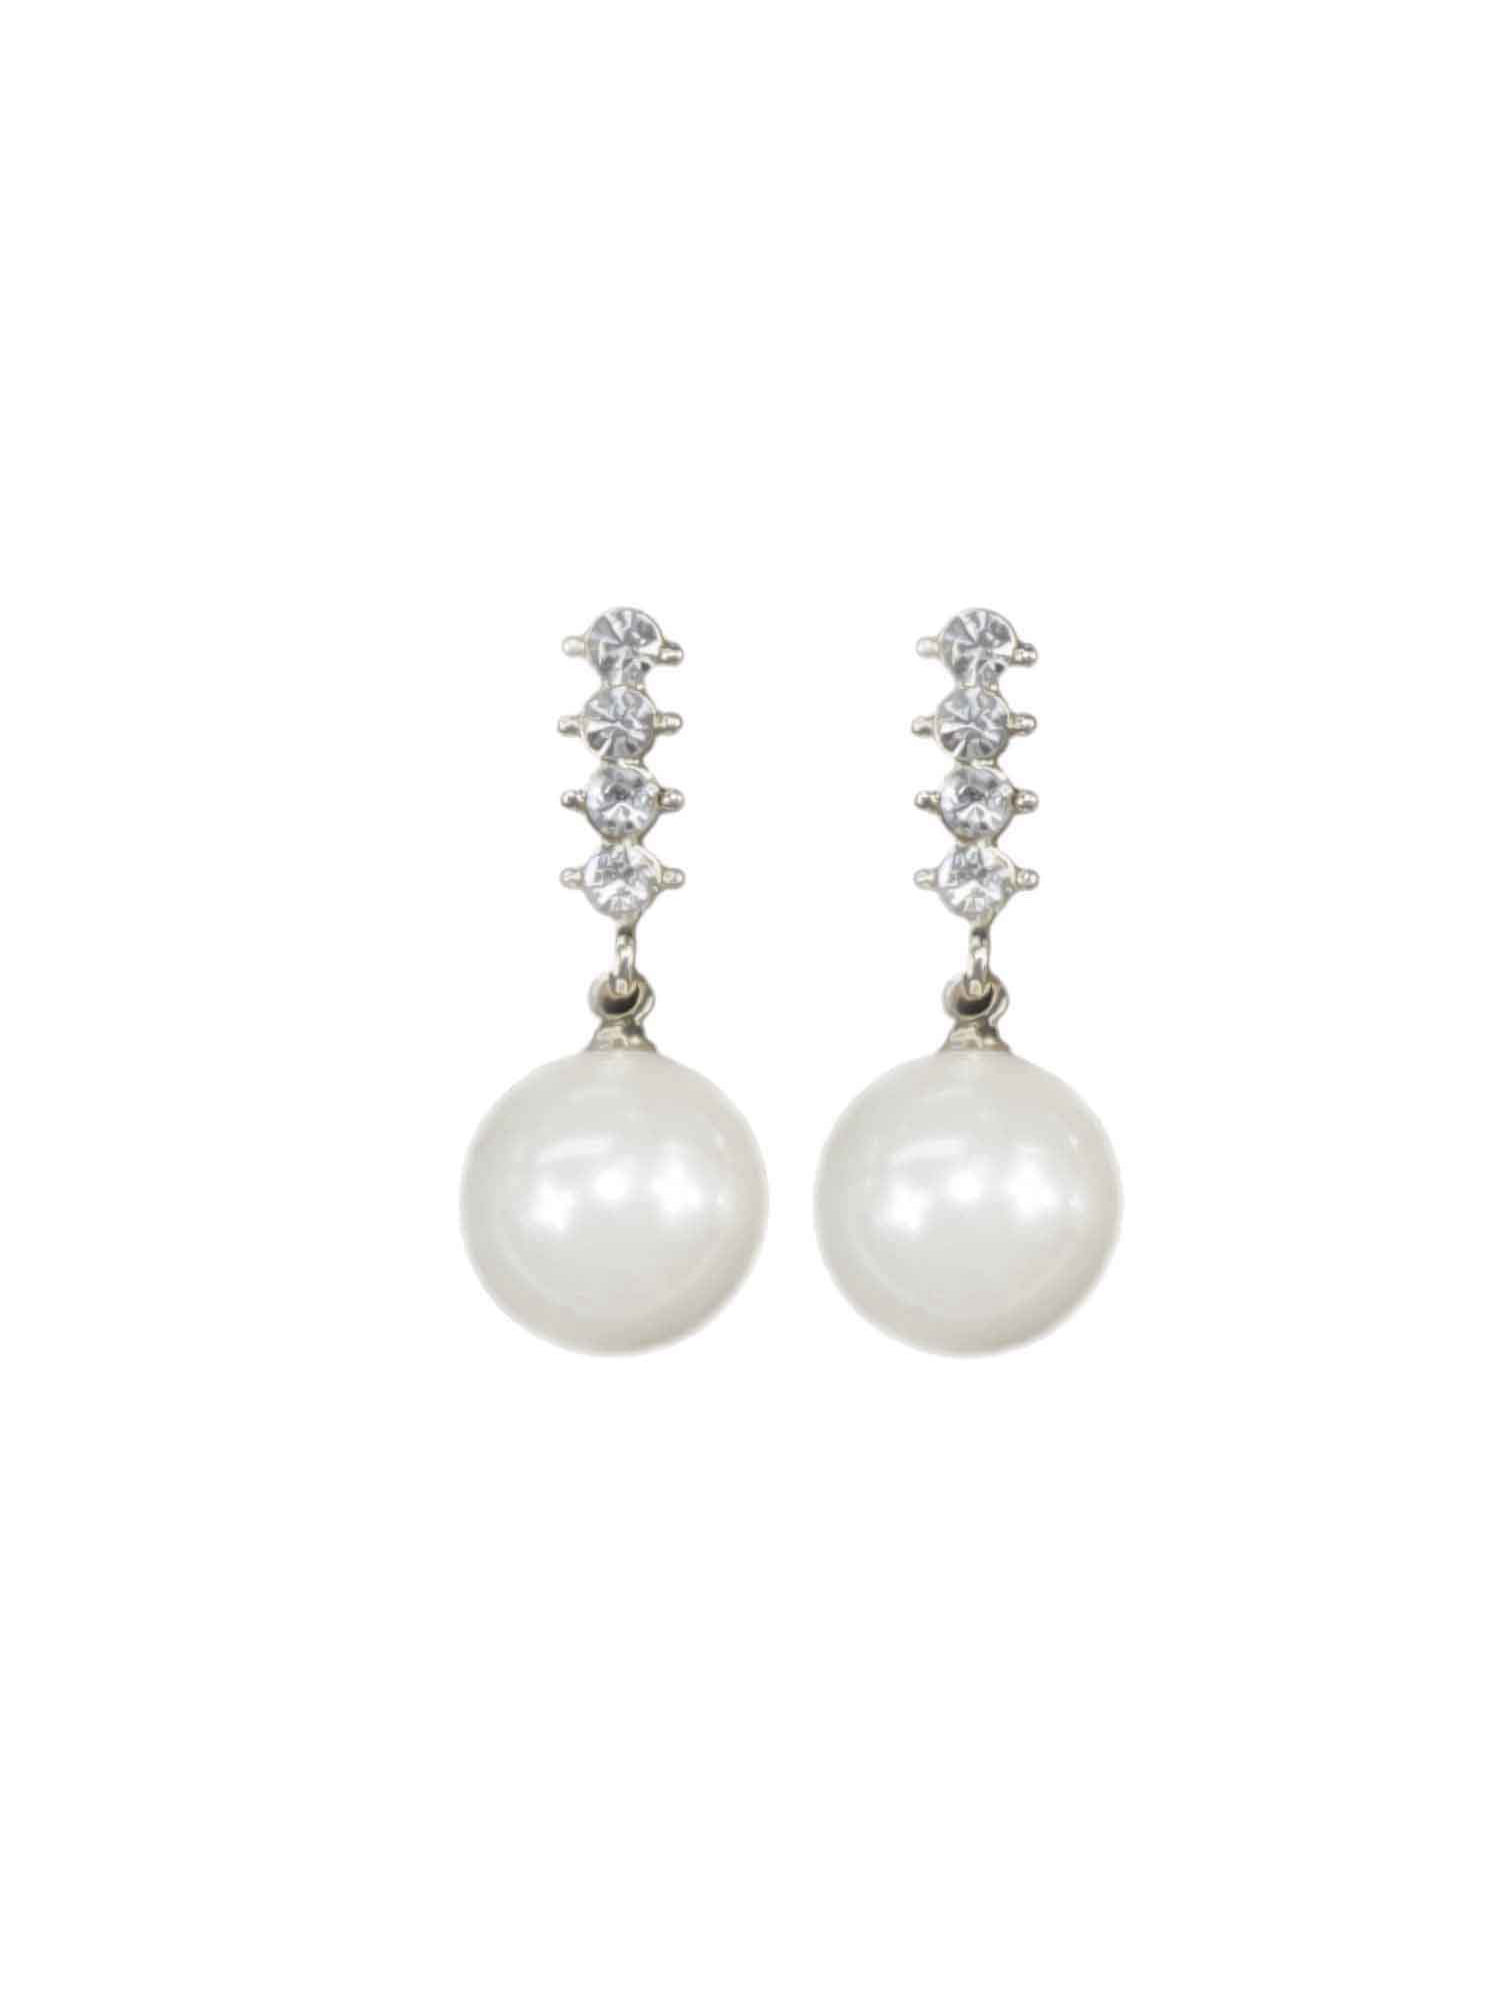 White Baroque Pearl Earring 18k Hook Flawless Fashion Wedding Dangle Jewelry 